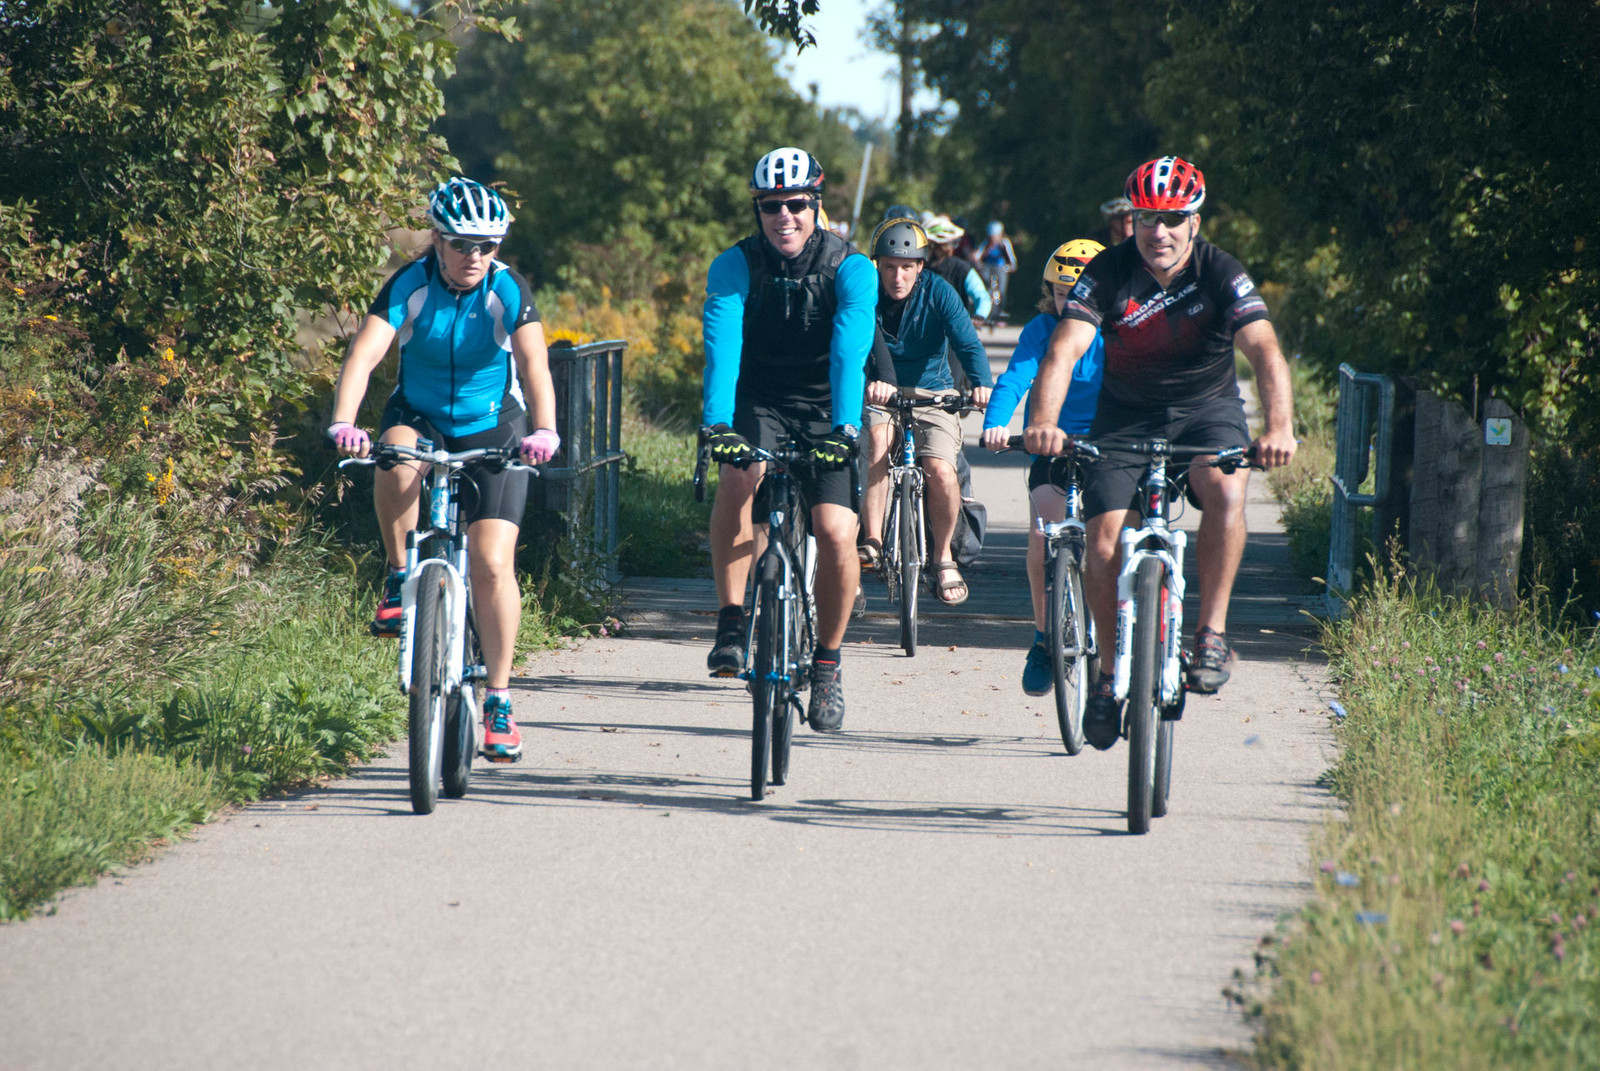 Group of adults biking